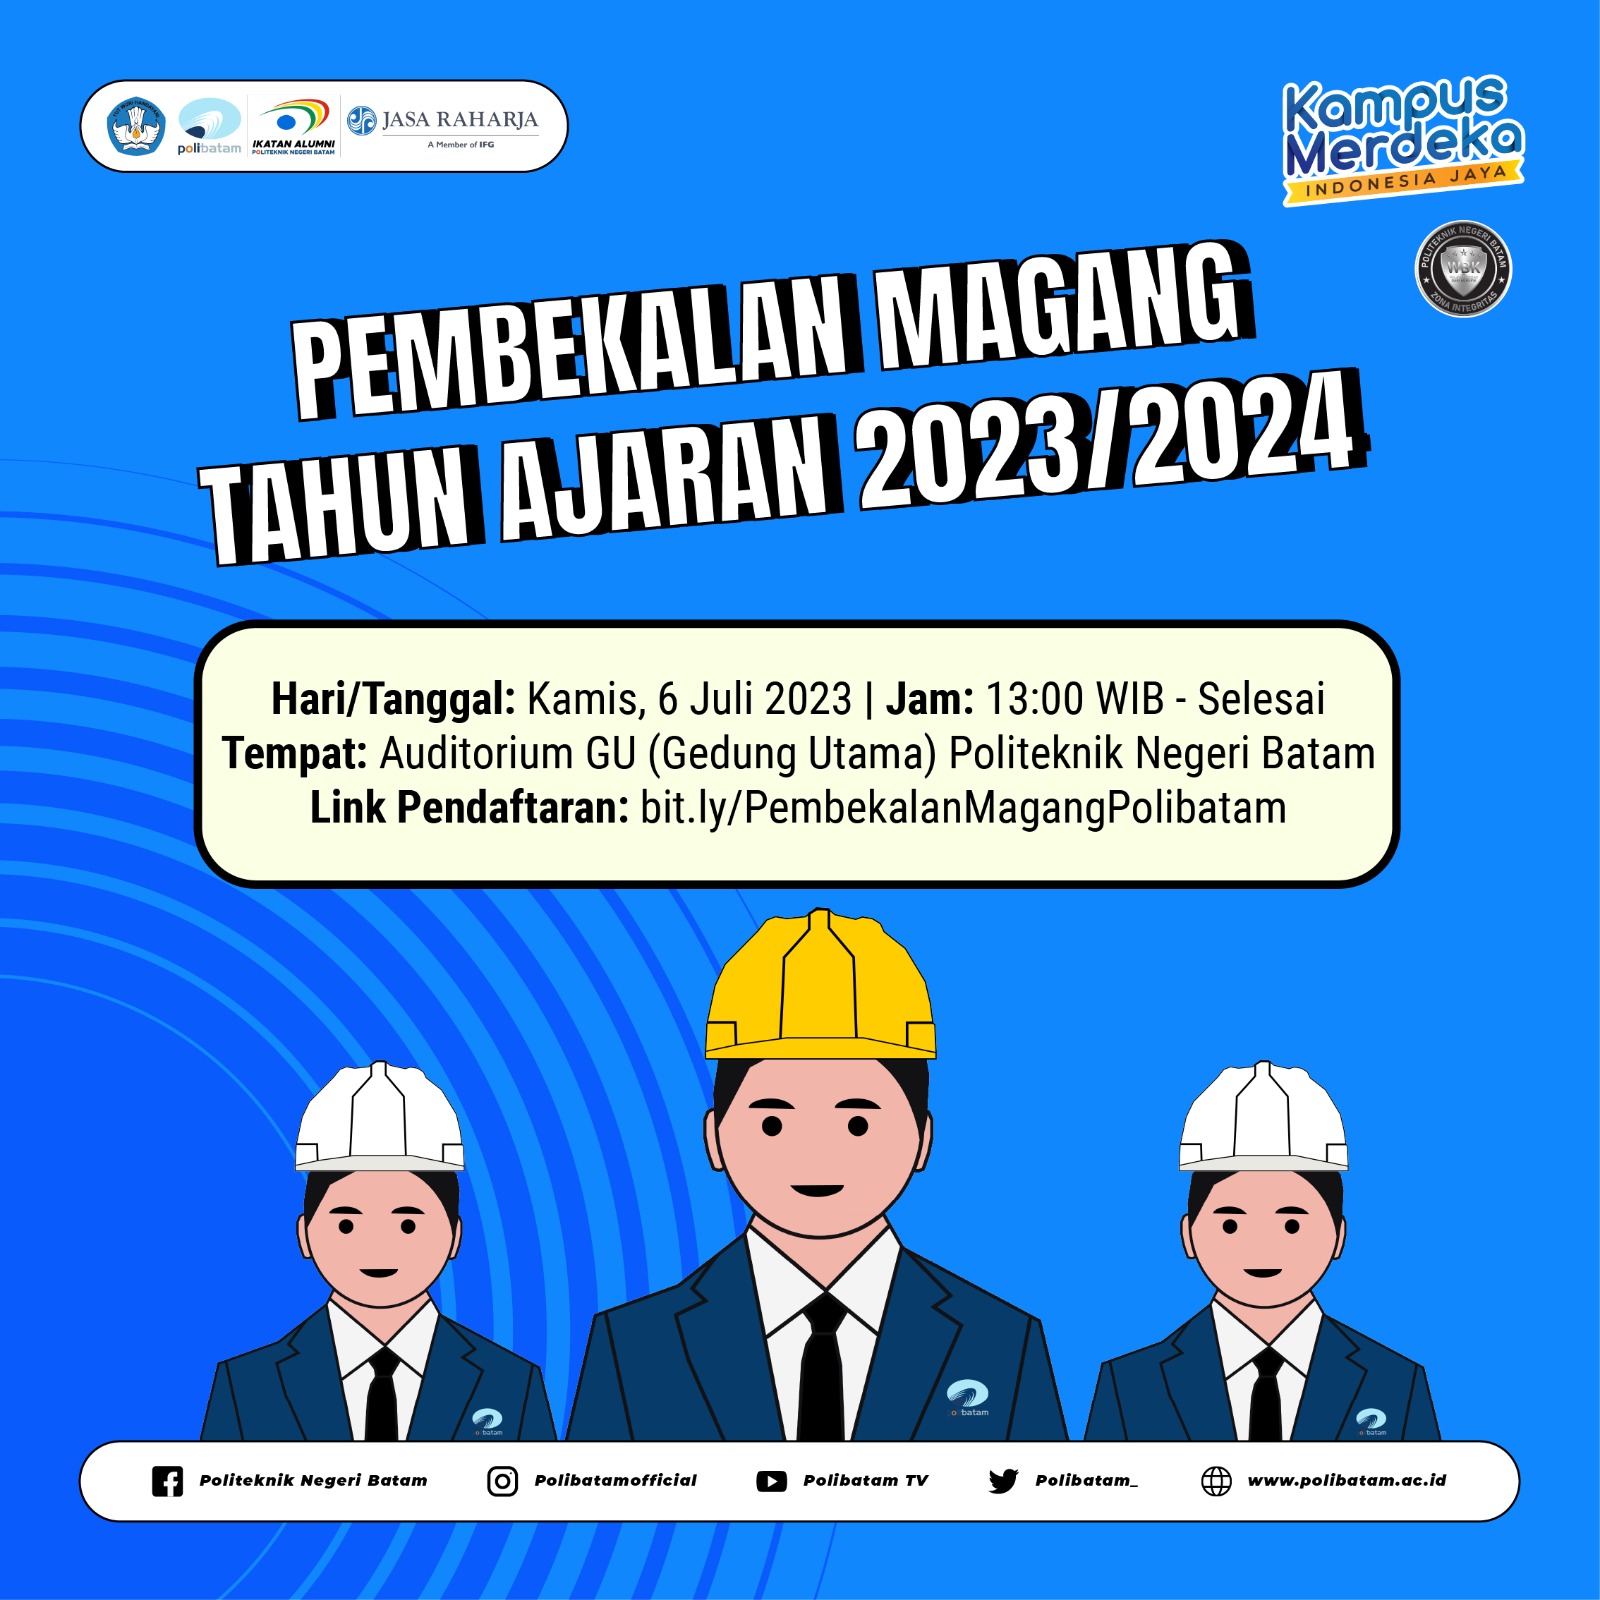 Attachment Pembekalan Magang 2023-2024.jpg